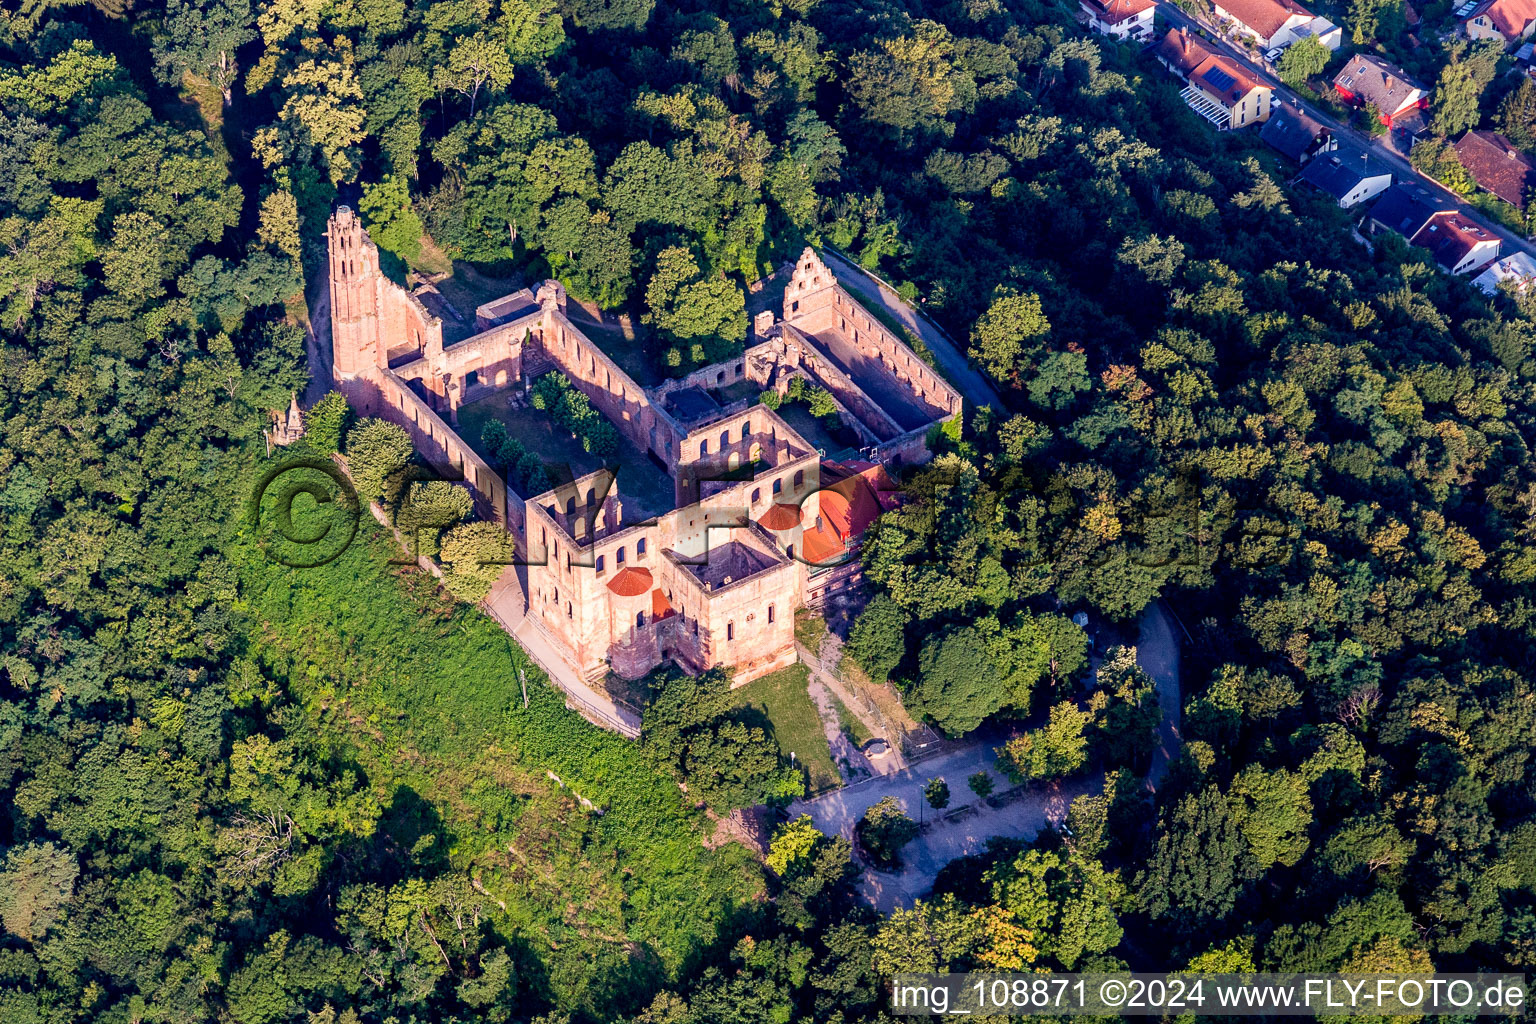 Ruins of the former monastery Limburg in Bad Duerkheim in the state Rhineland-Palatinate, Germany